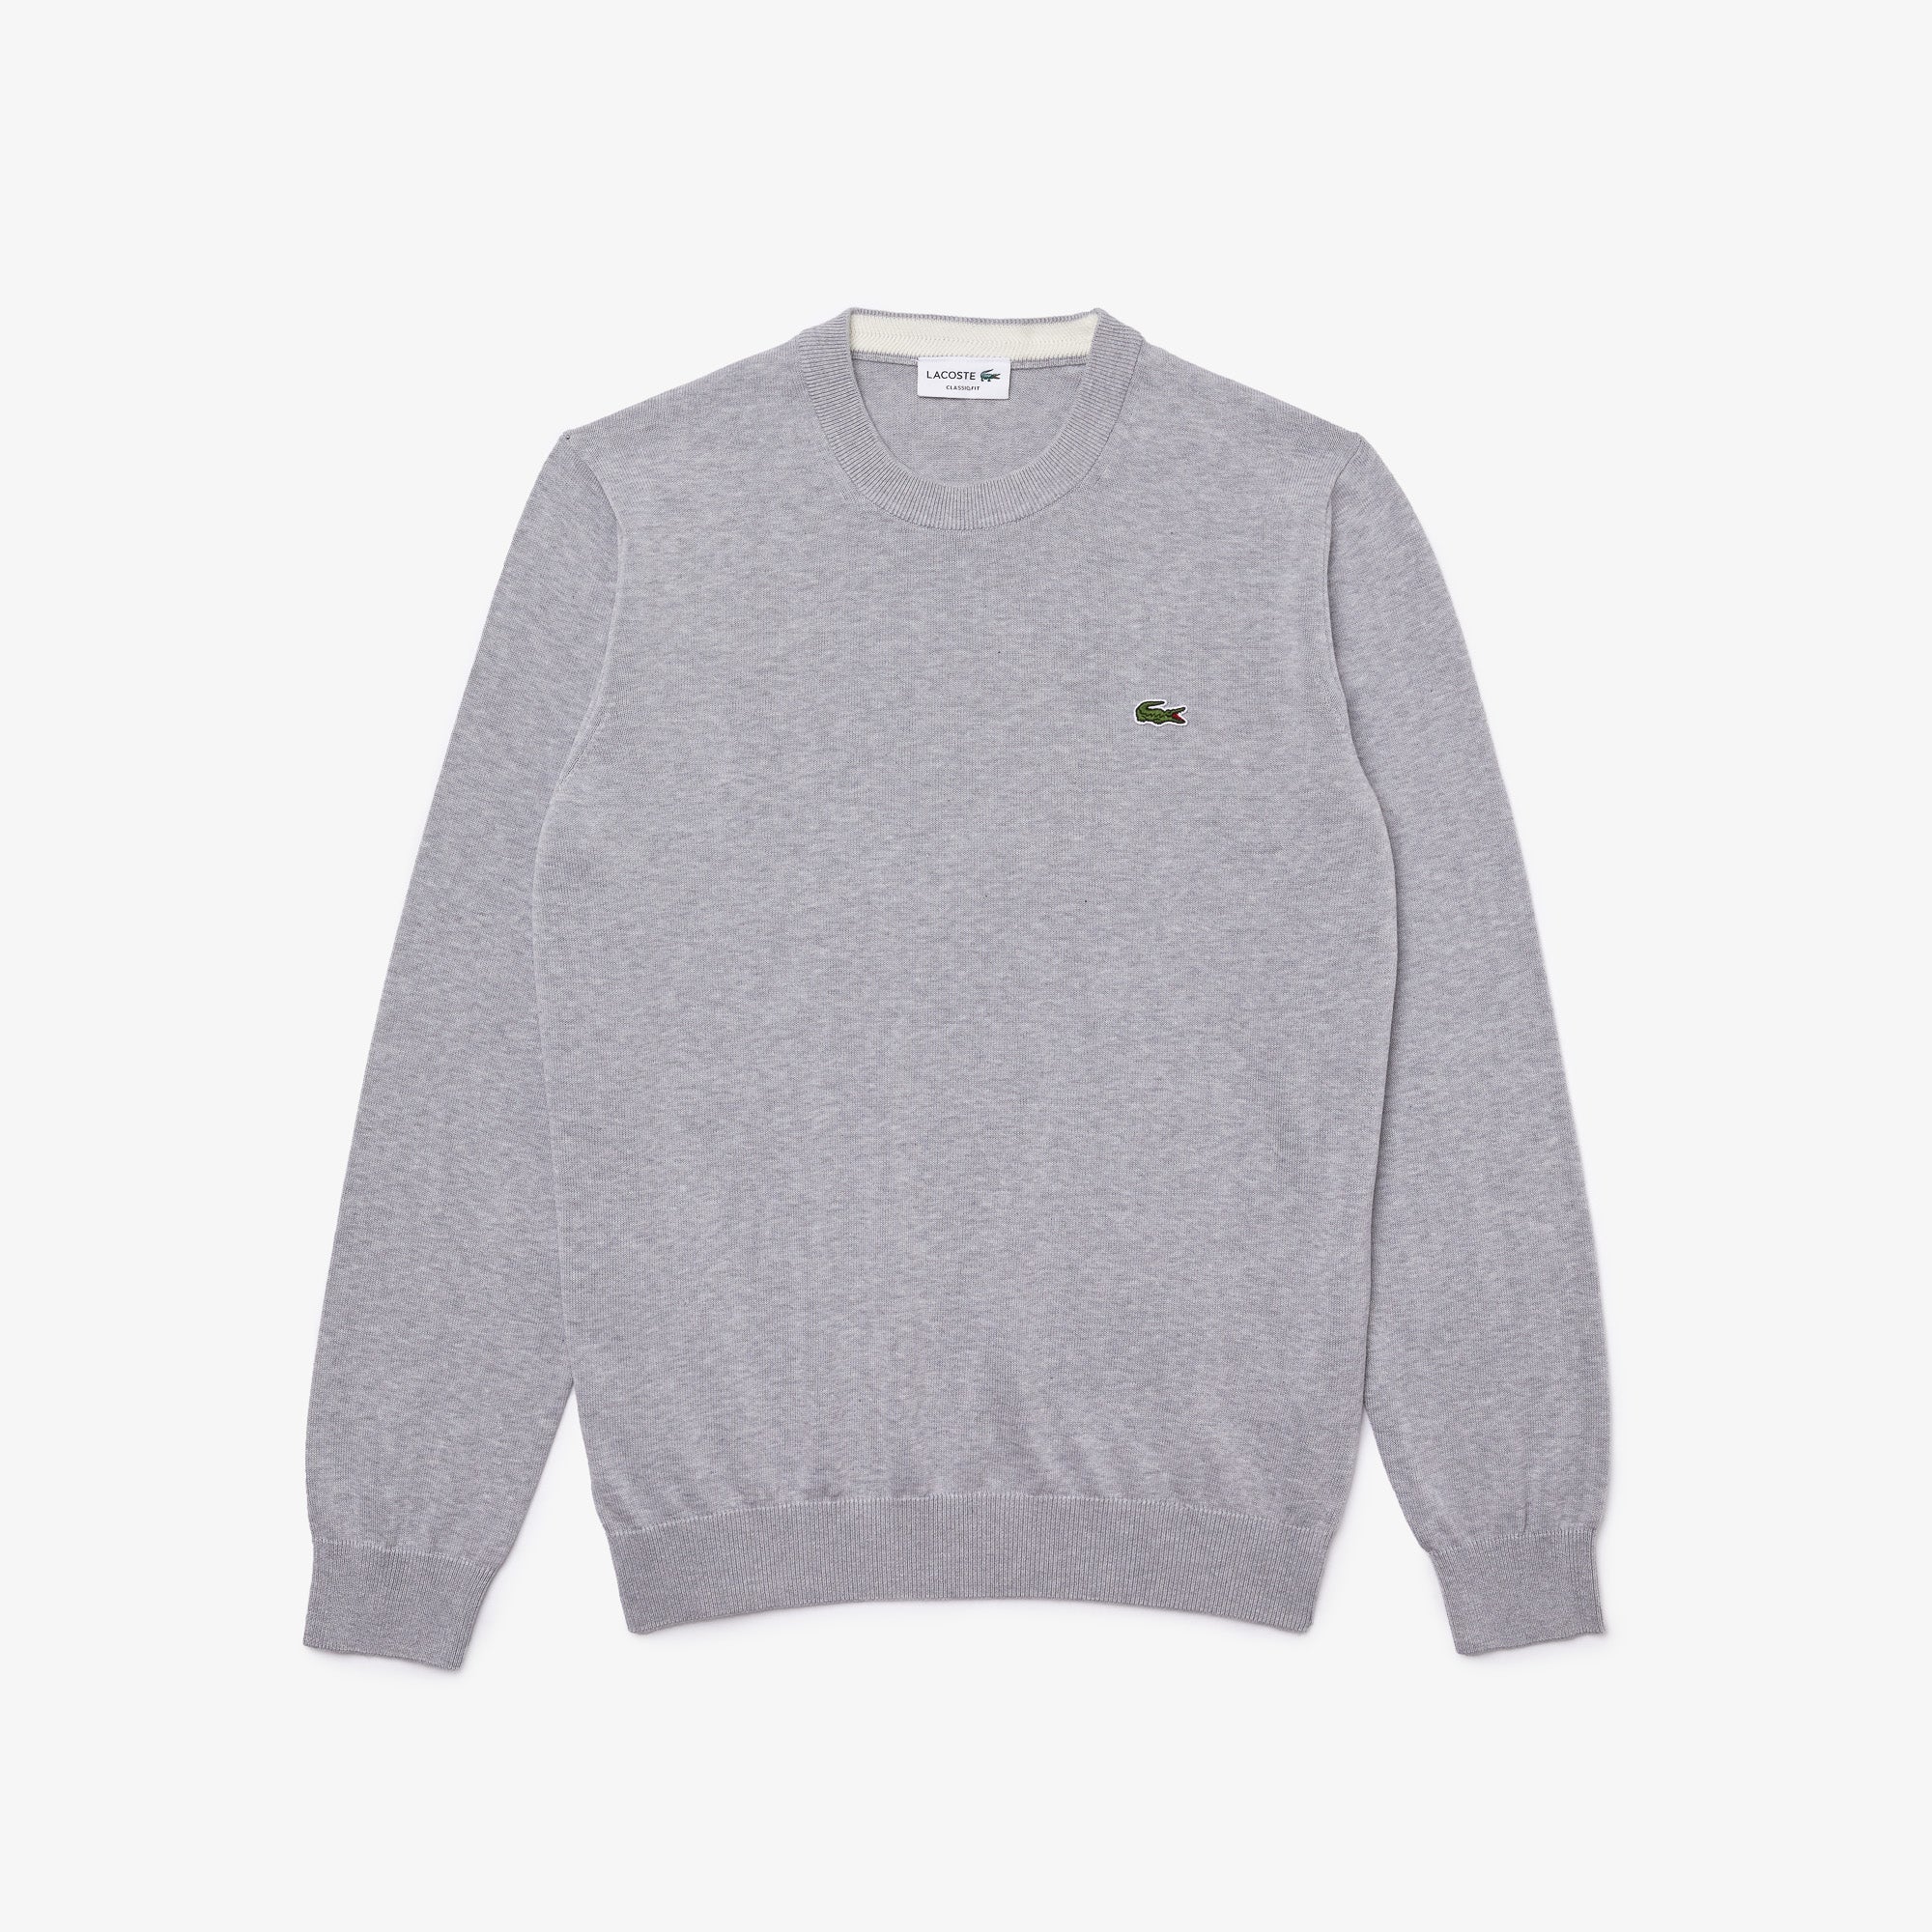 Lacoste Men's Organic Cotton Crew Neck Sweater - Grey